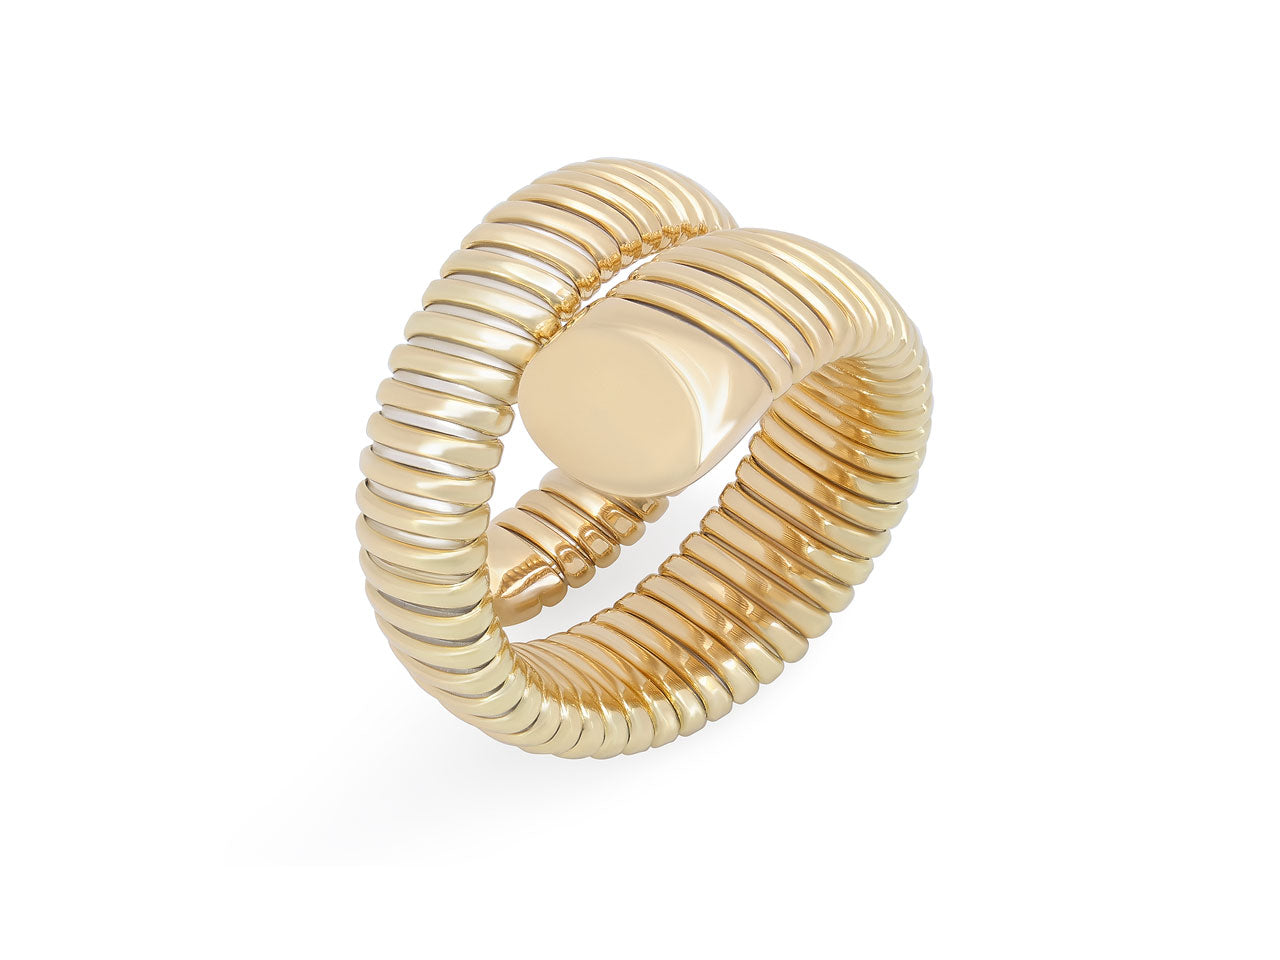 Tubogas 'Snake' Ring in 18K Gold, by Beladora